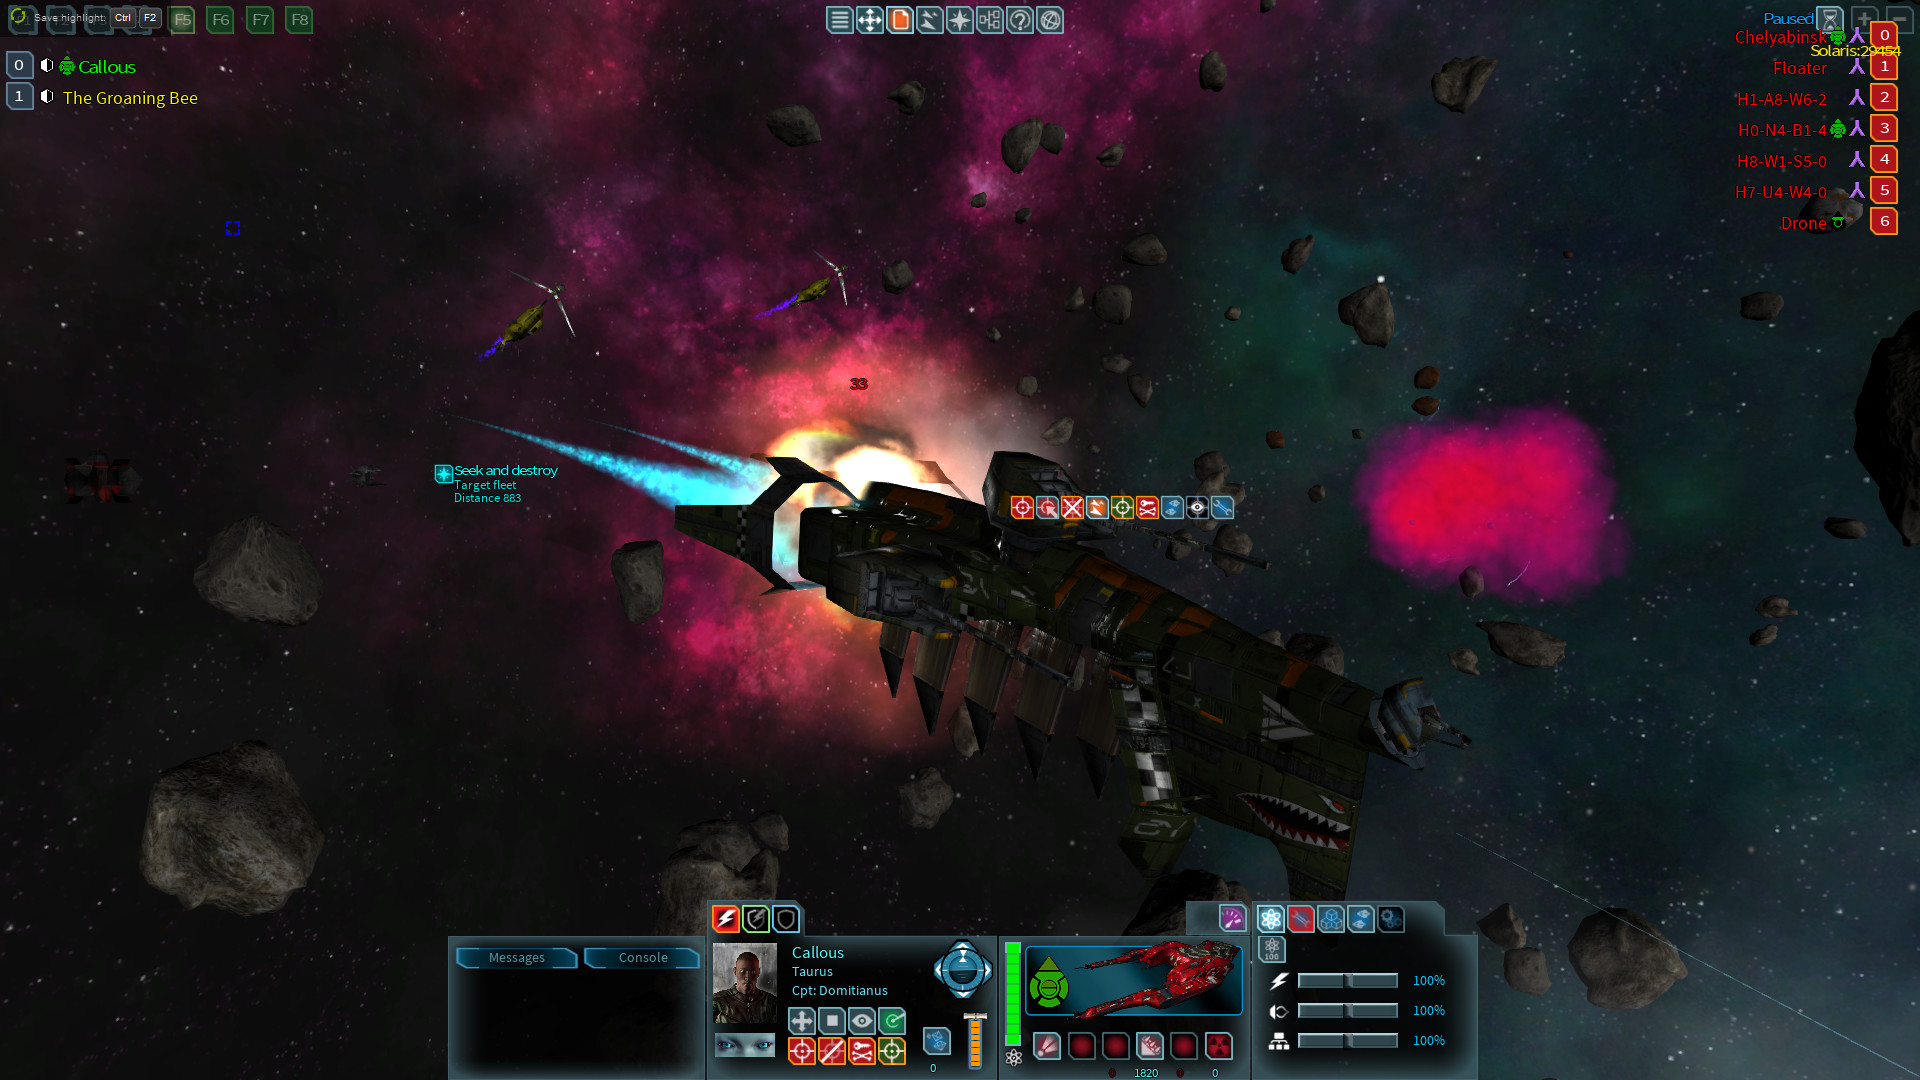 Ceres screenshot